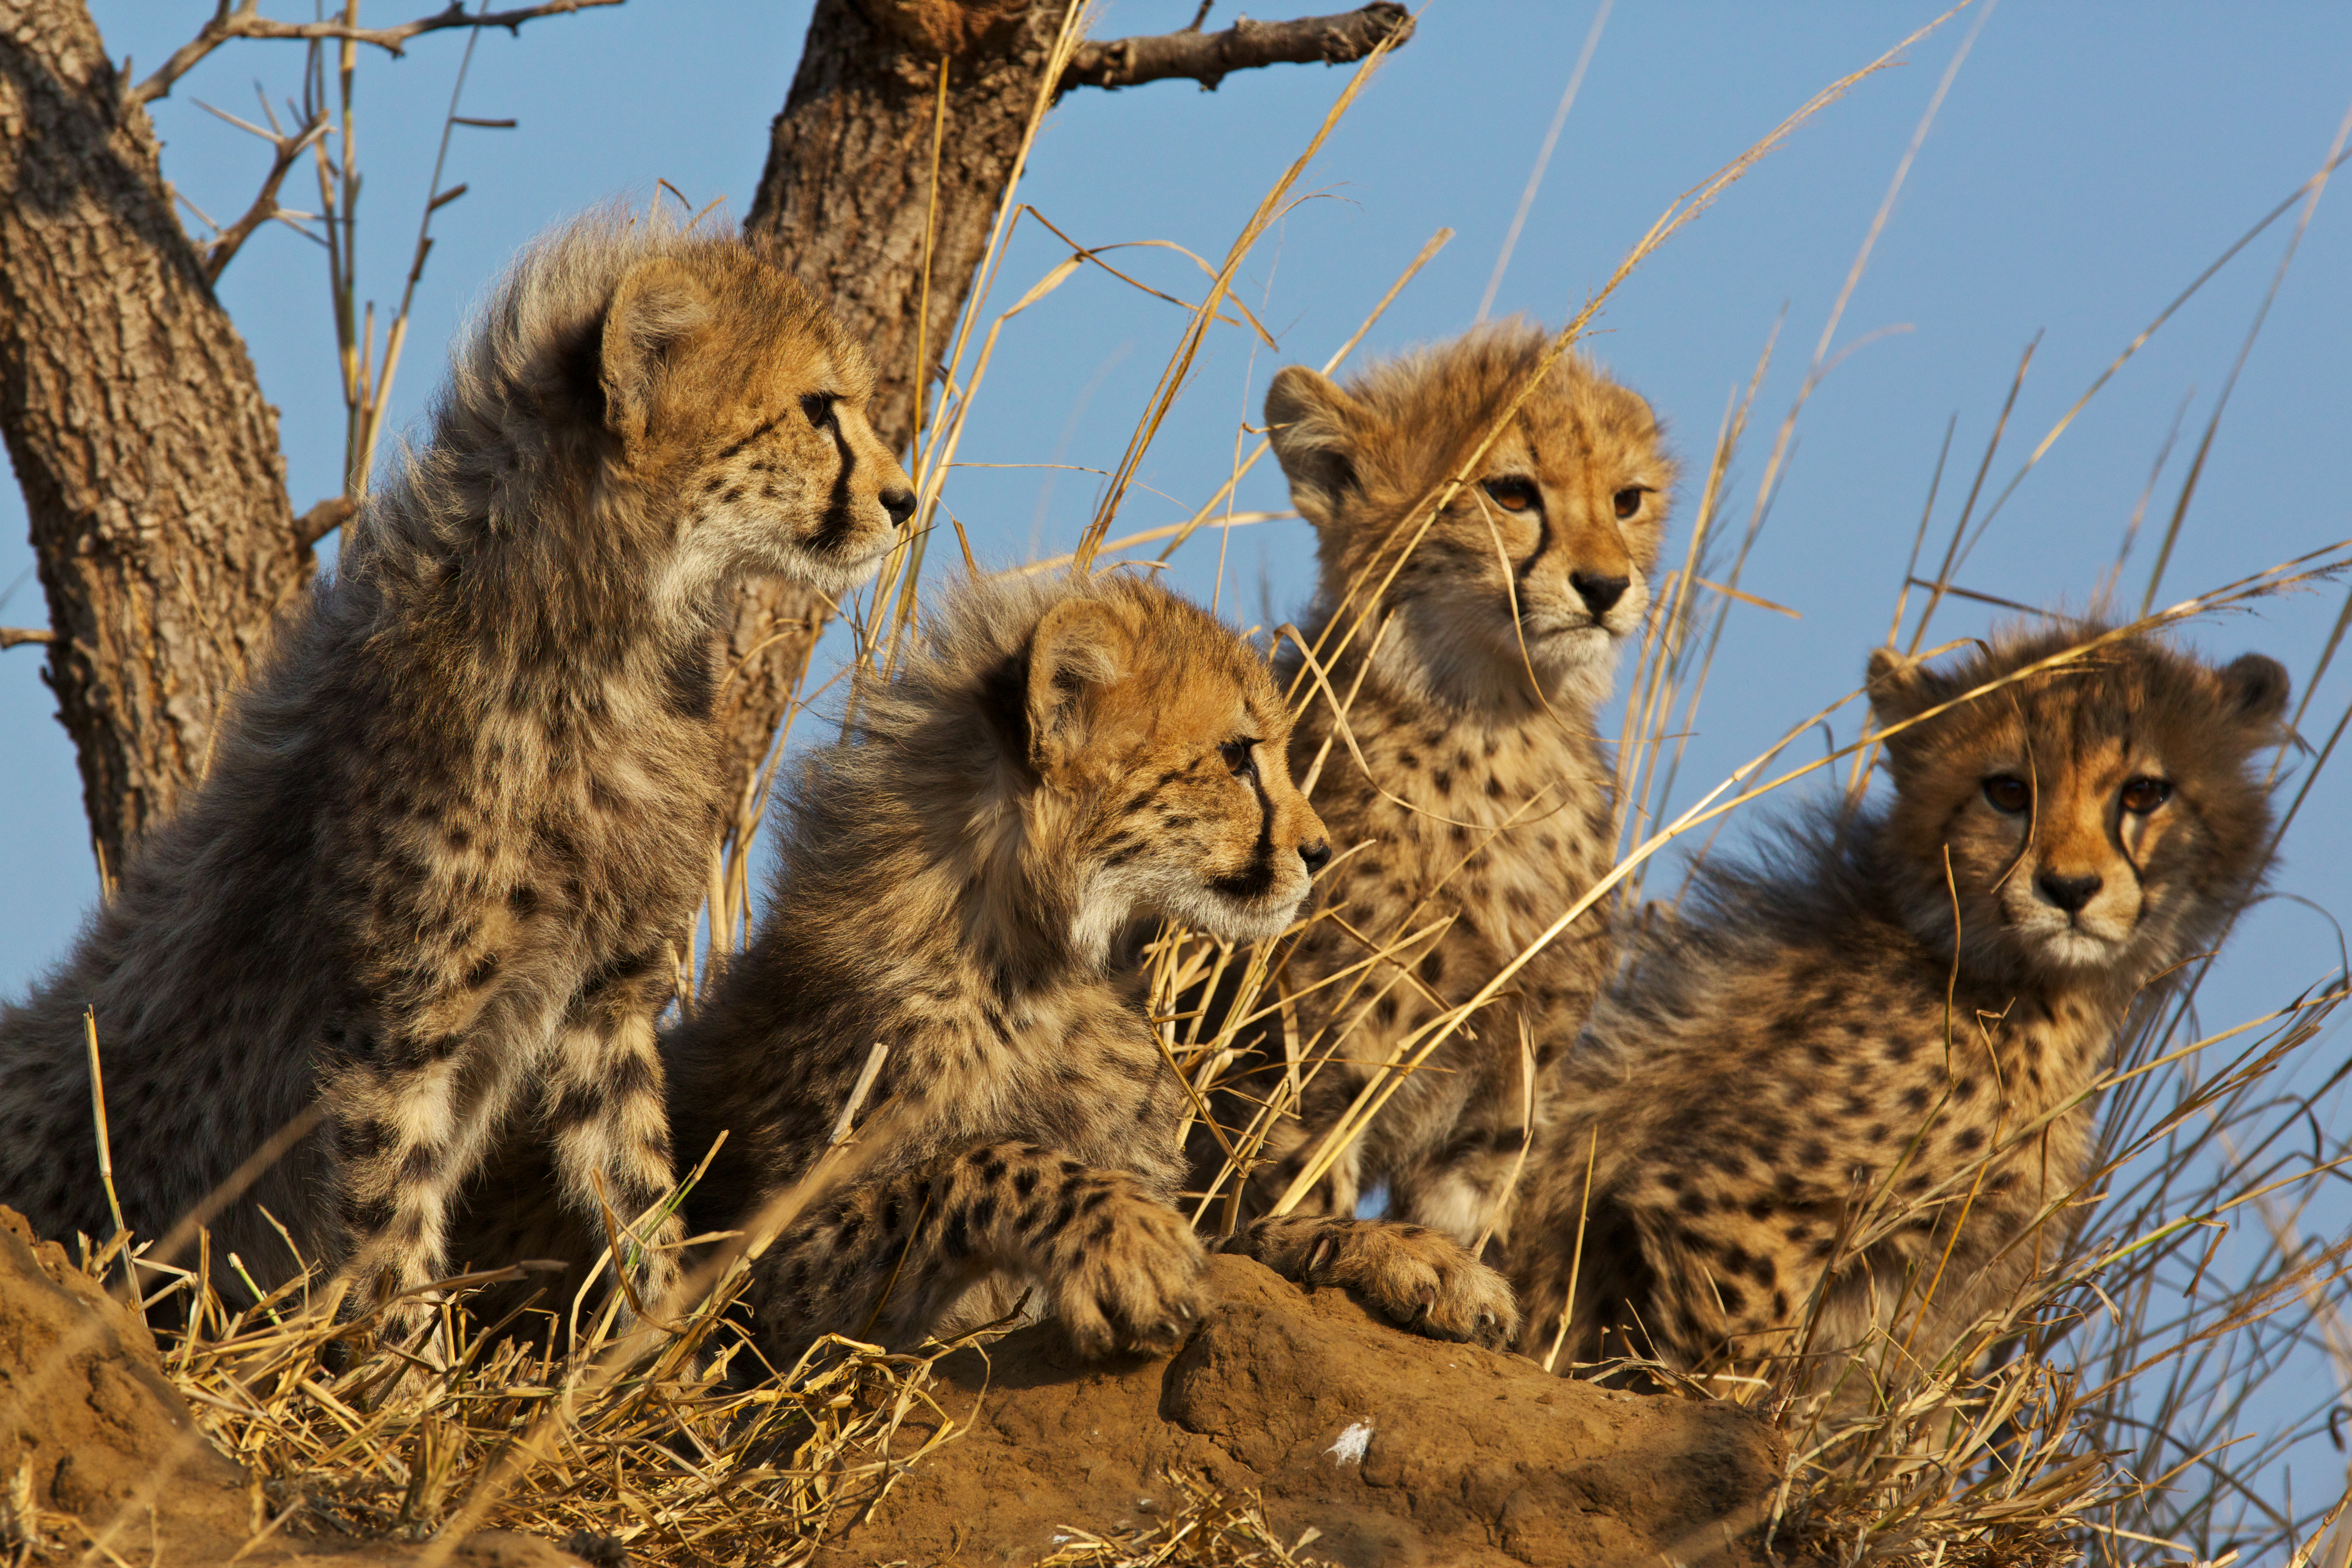 "Cheetah cubs under tree"